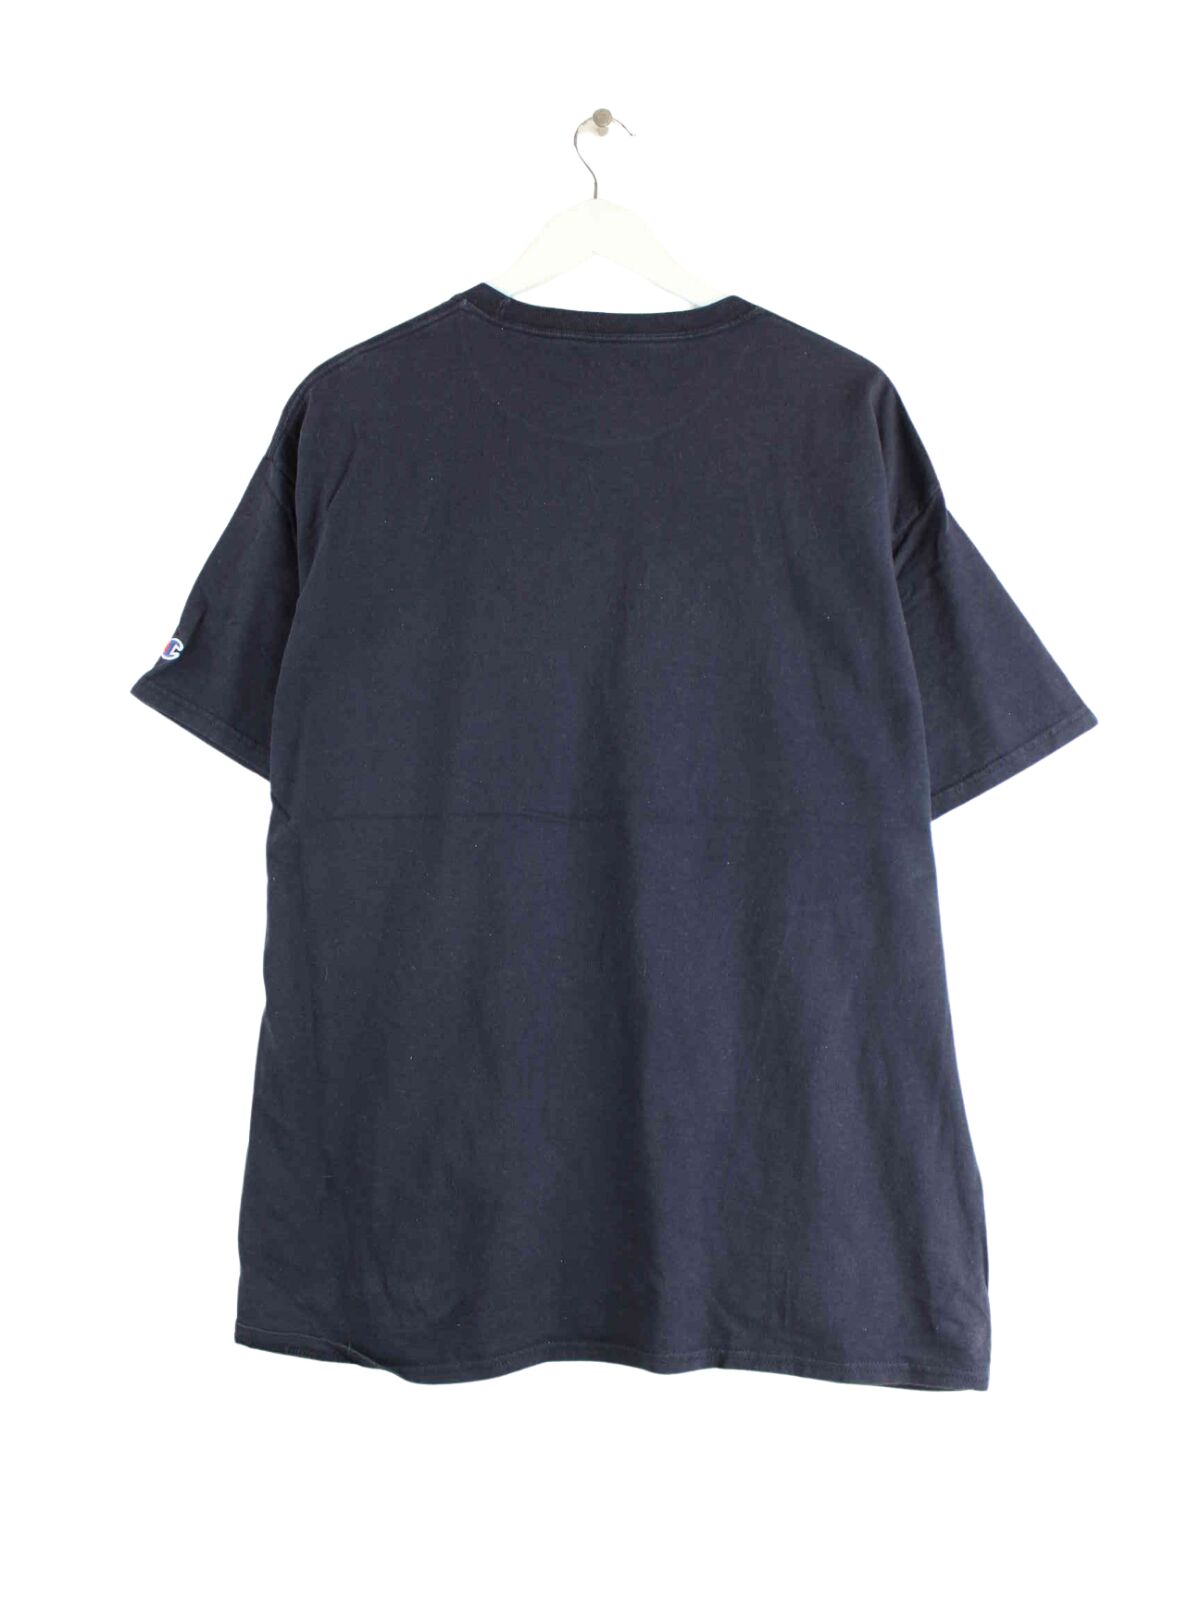 Champion Georgia Tech Print T-Shirt Blau XL (back image)